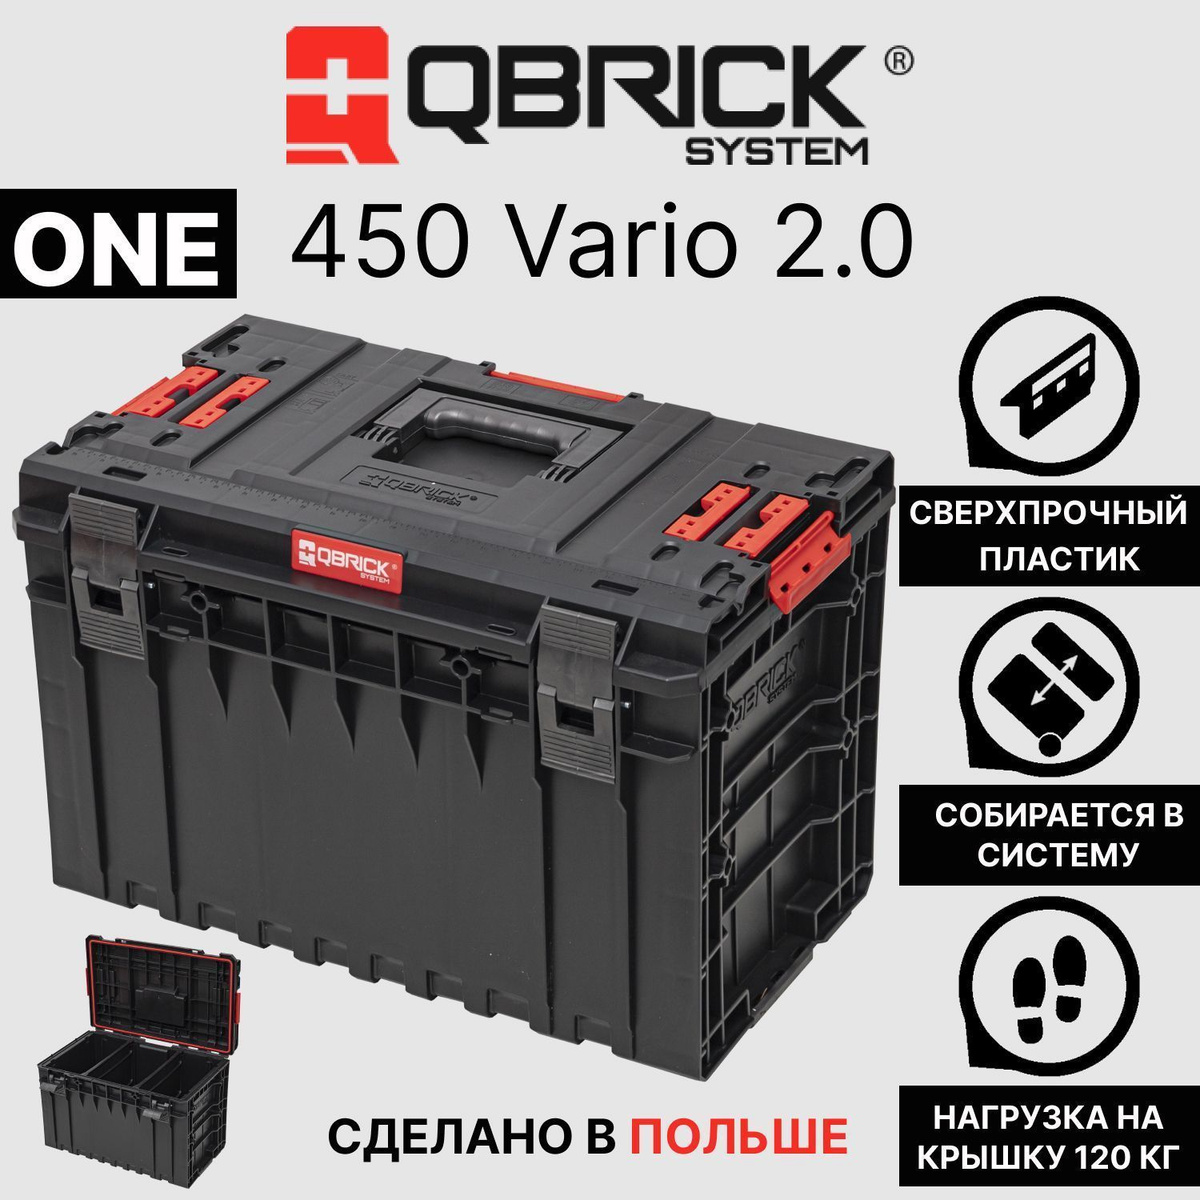 Qbrick System ONE 450 Vario 2.0